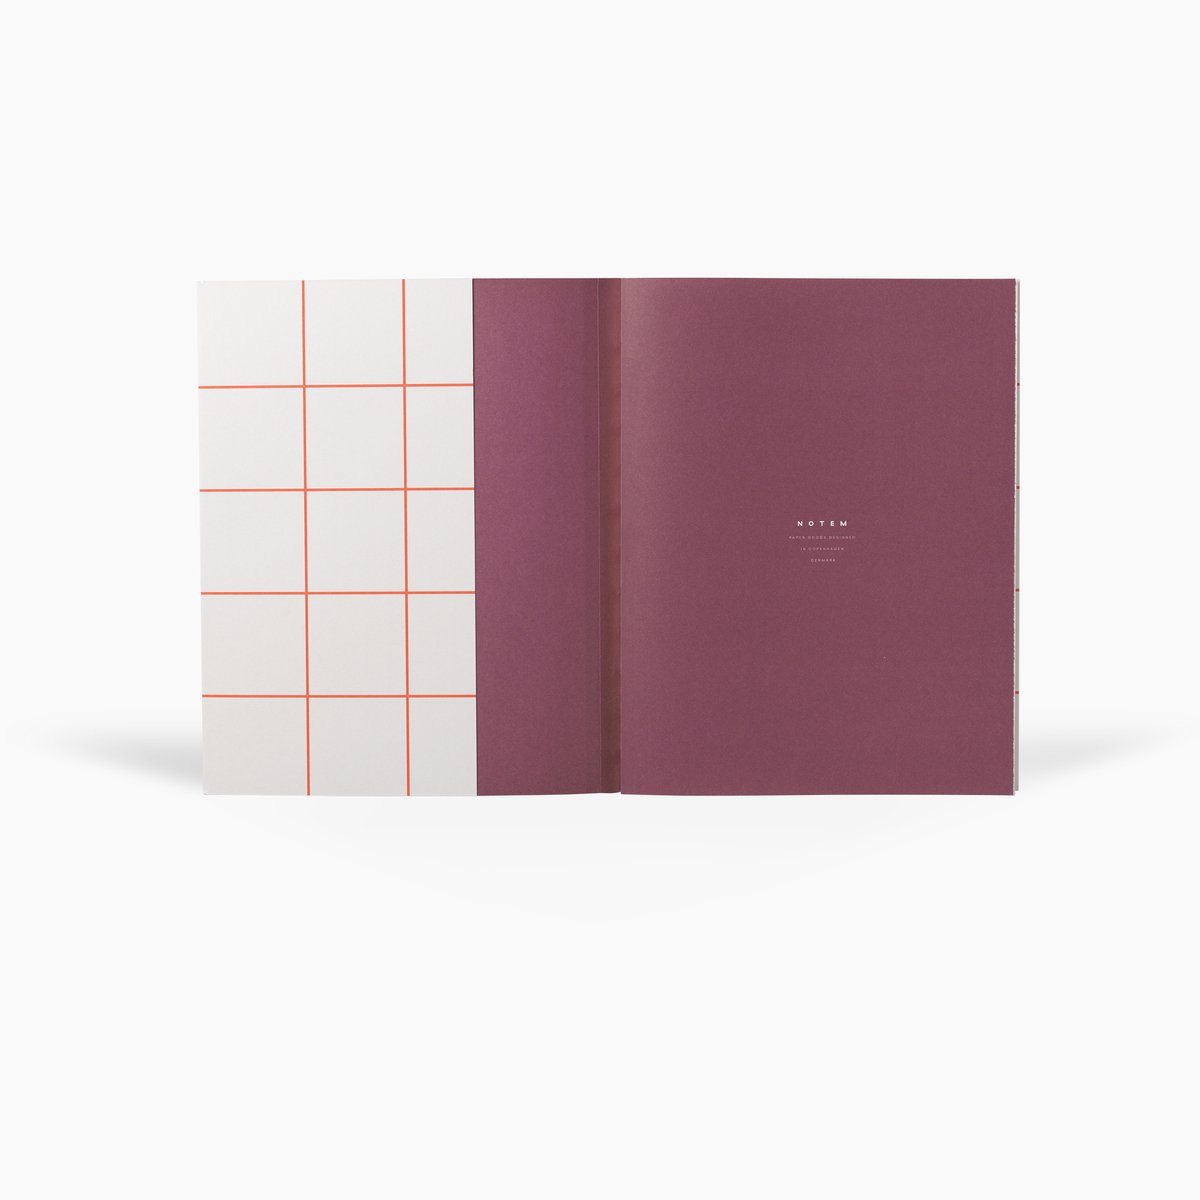 Notebook UMA with cover - large - Light Grey by Notem Studio - Lifestory